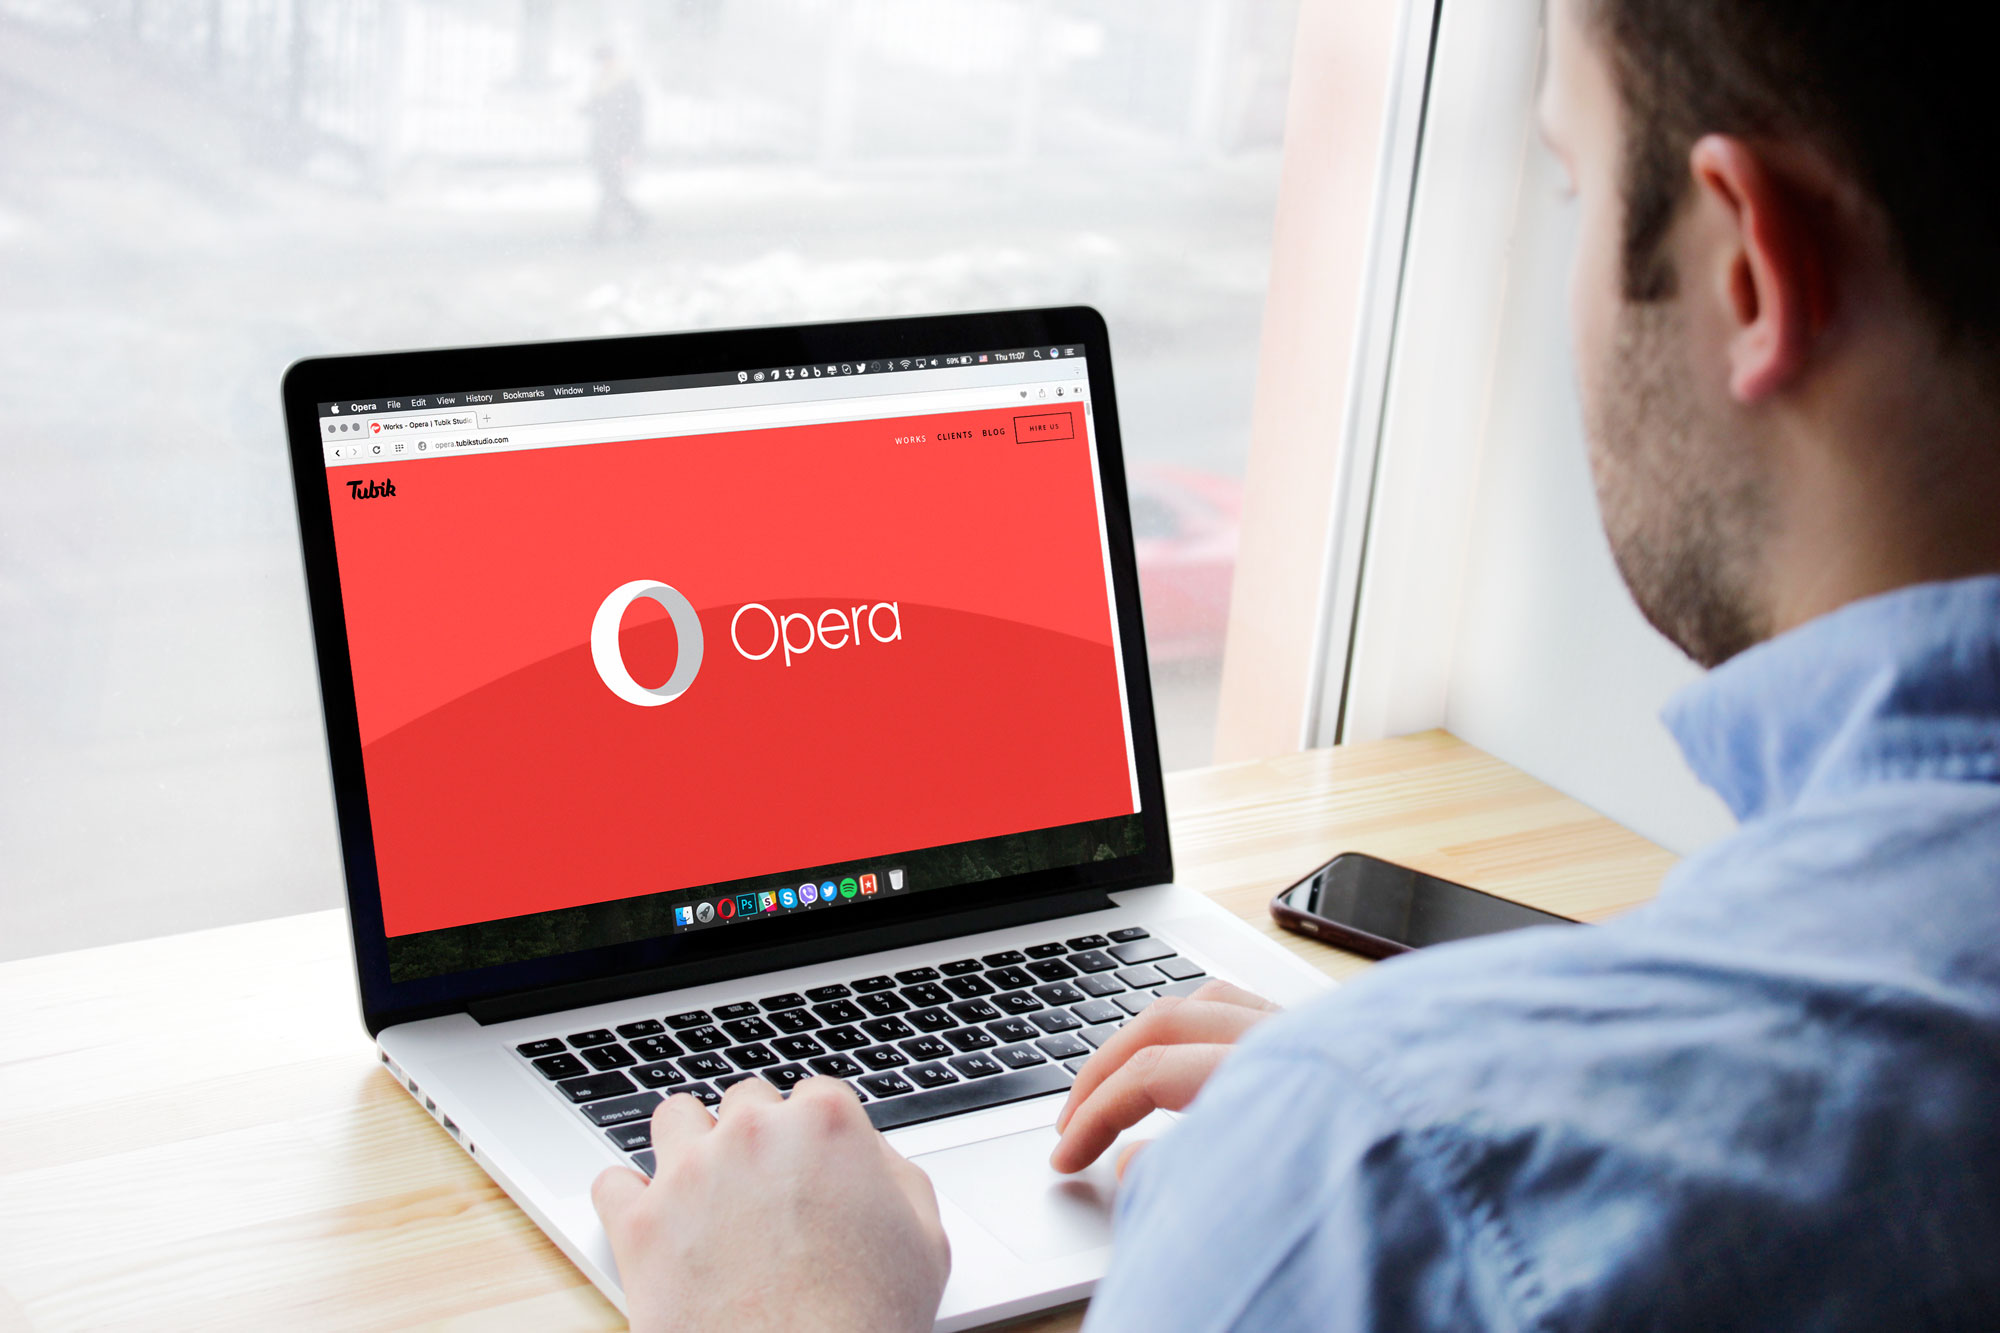 opera video design case study tubik